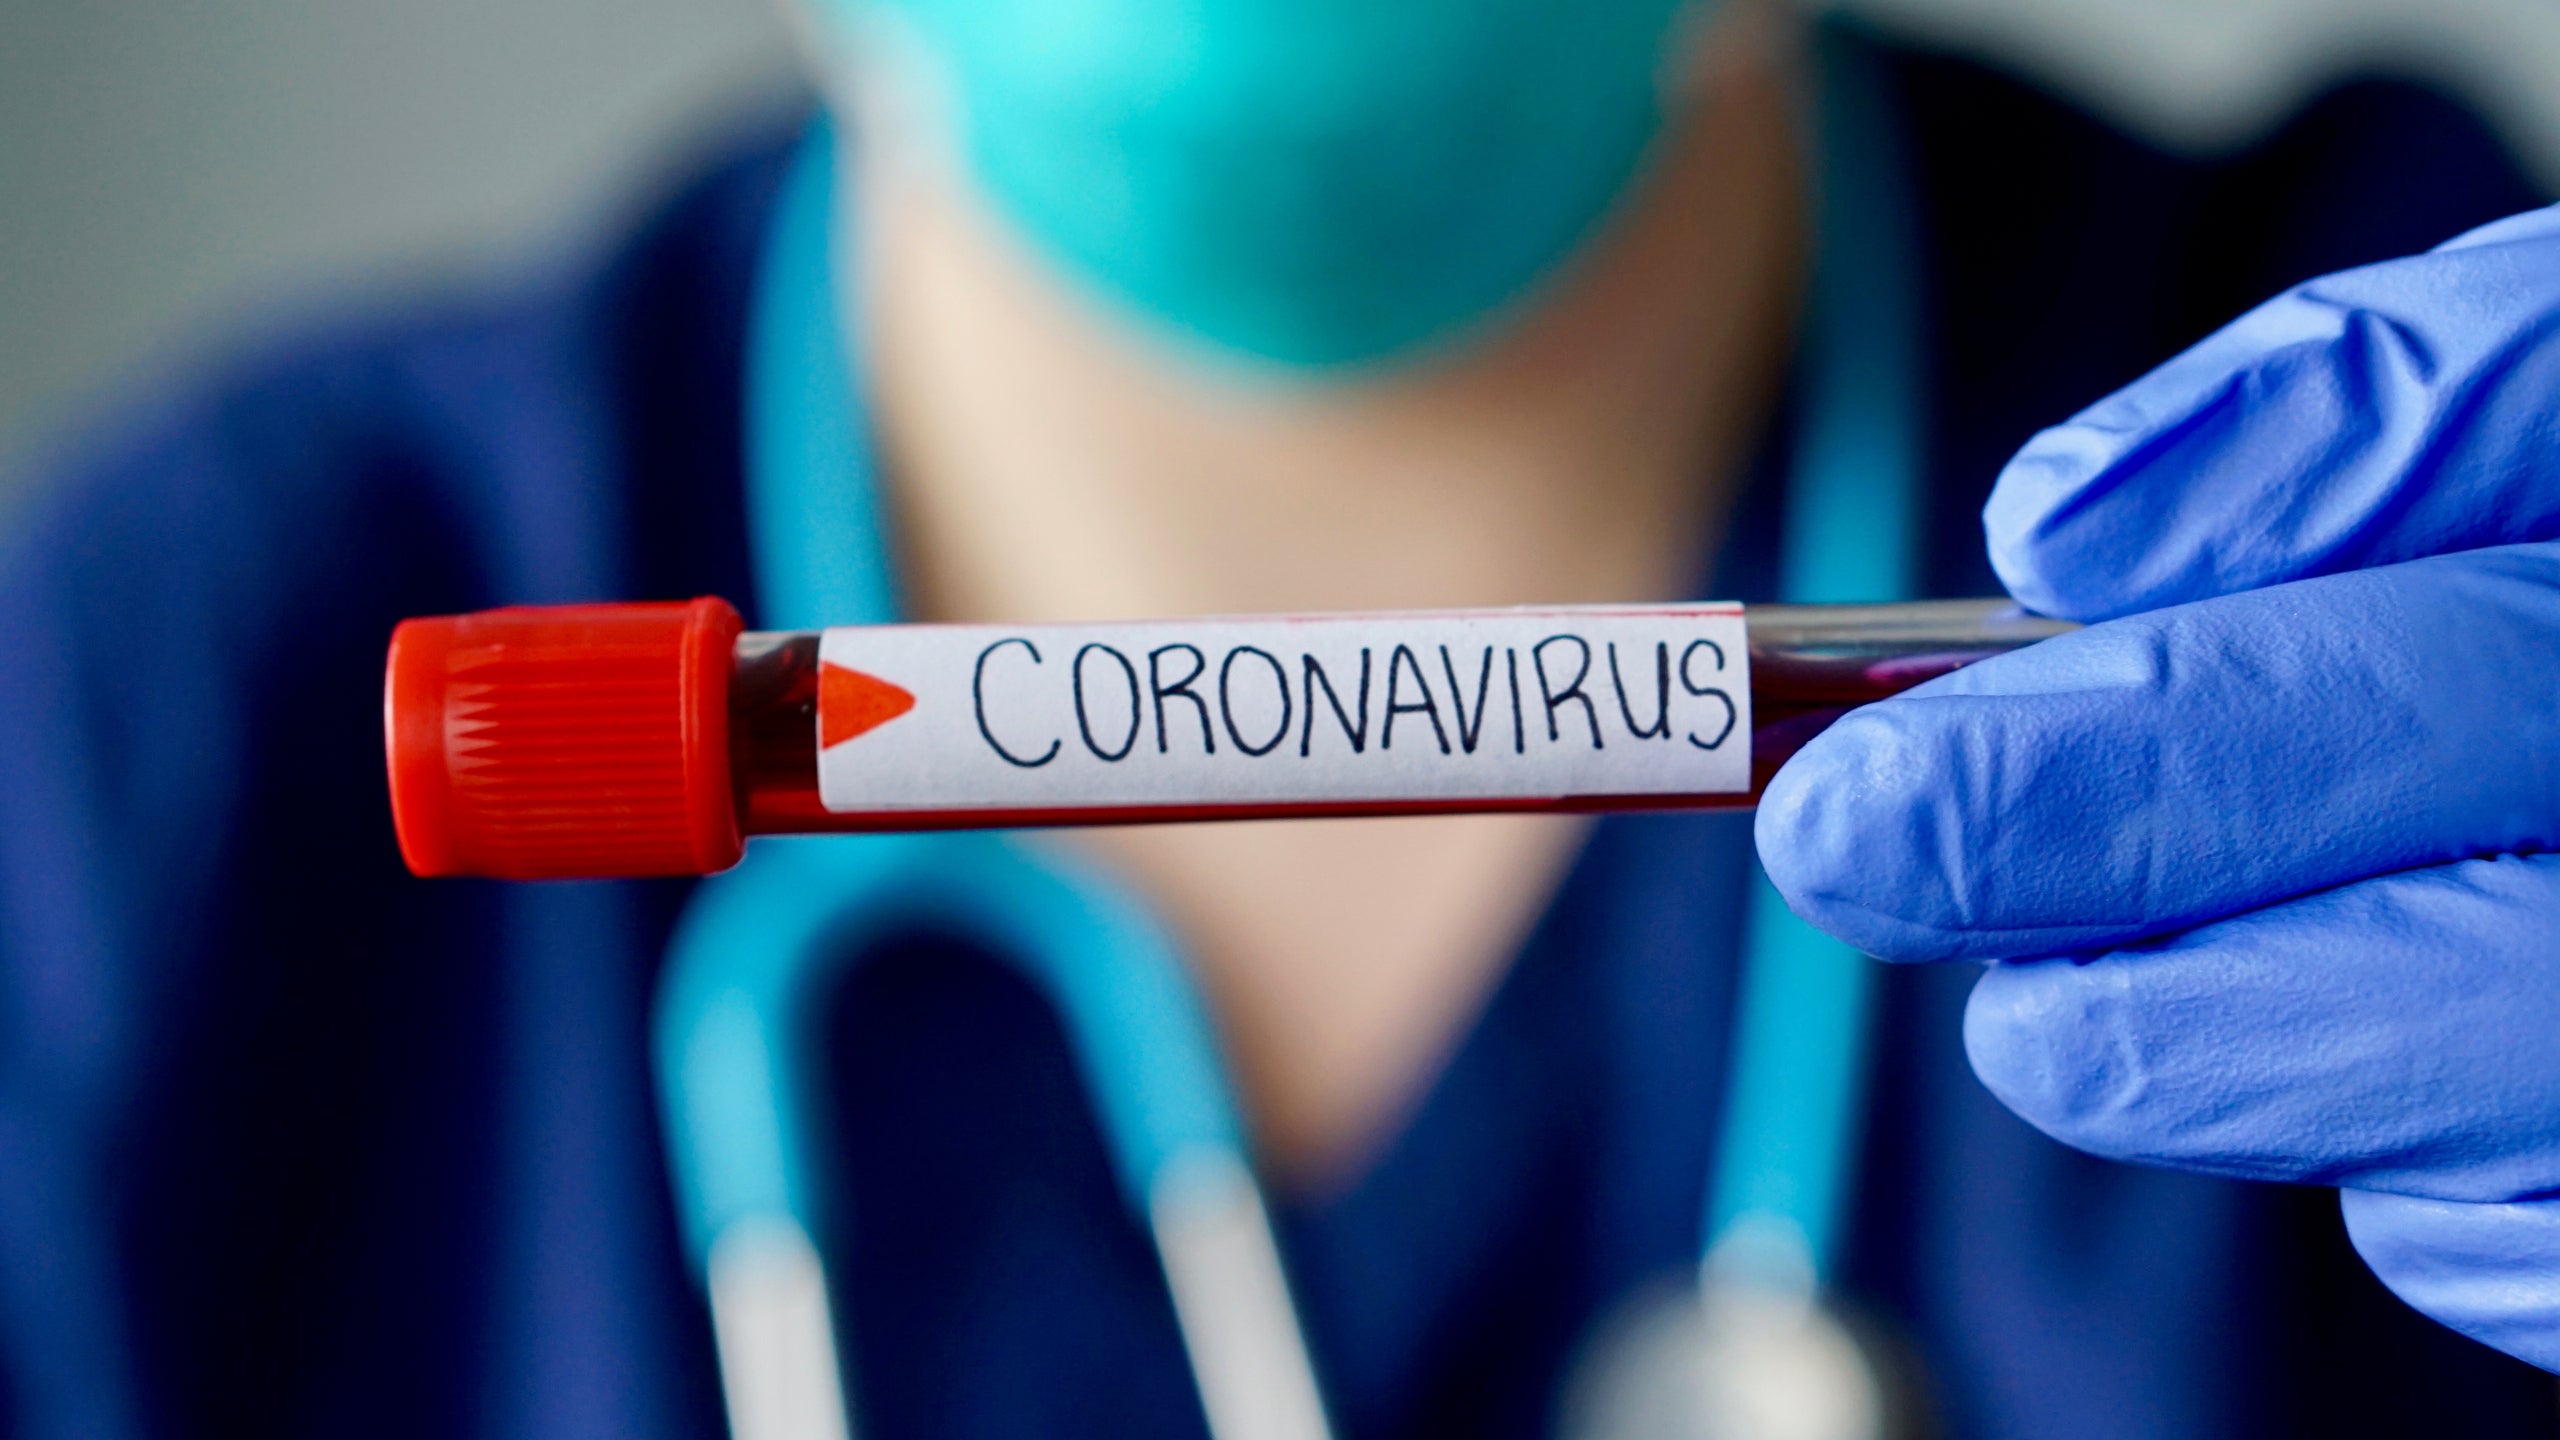 Two cases of coronavirus detected in Pakistan